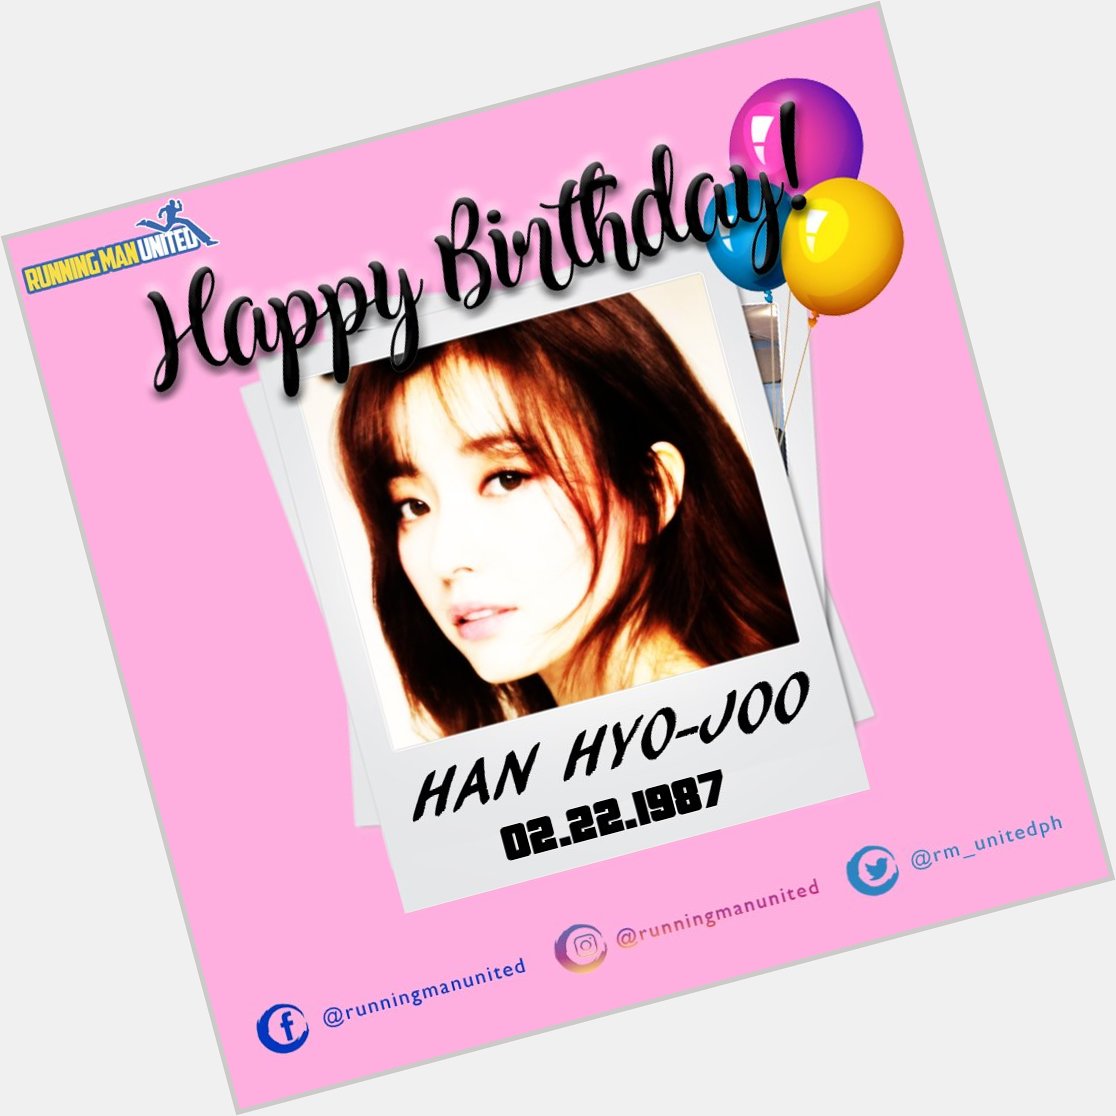 Happy Birthday Han Hyo-joo! 